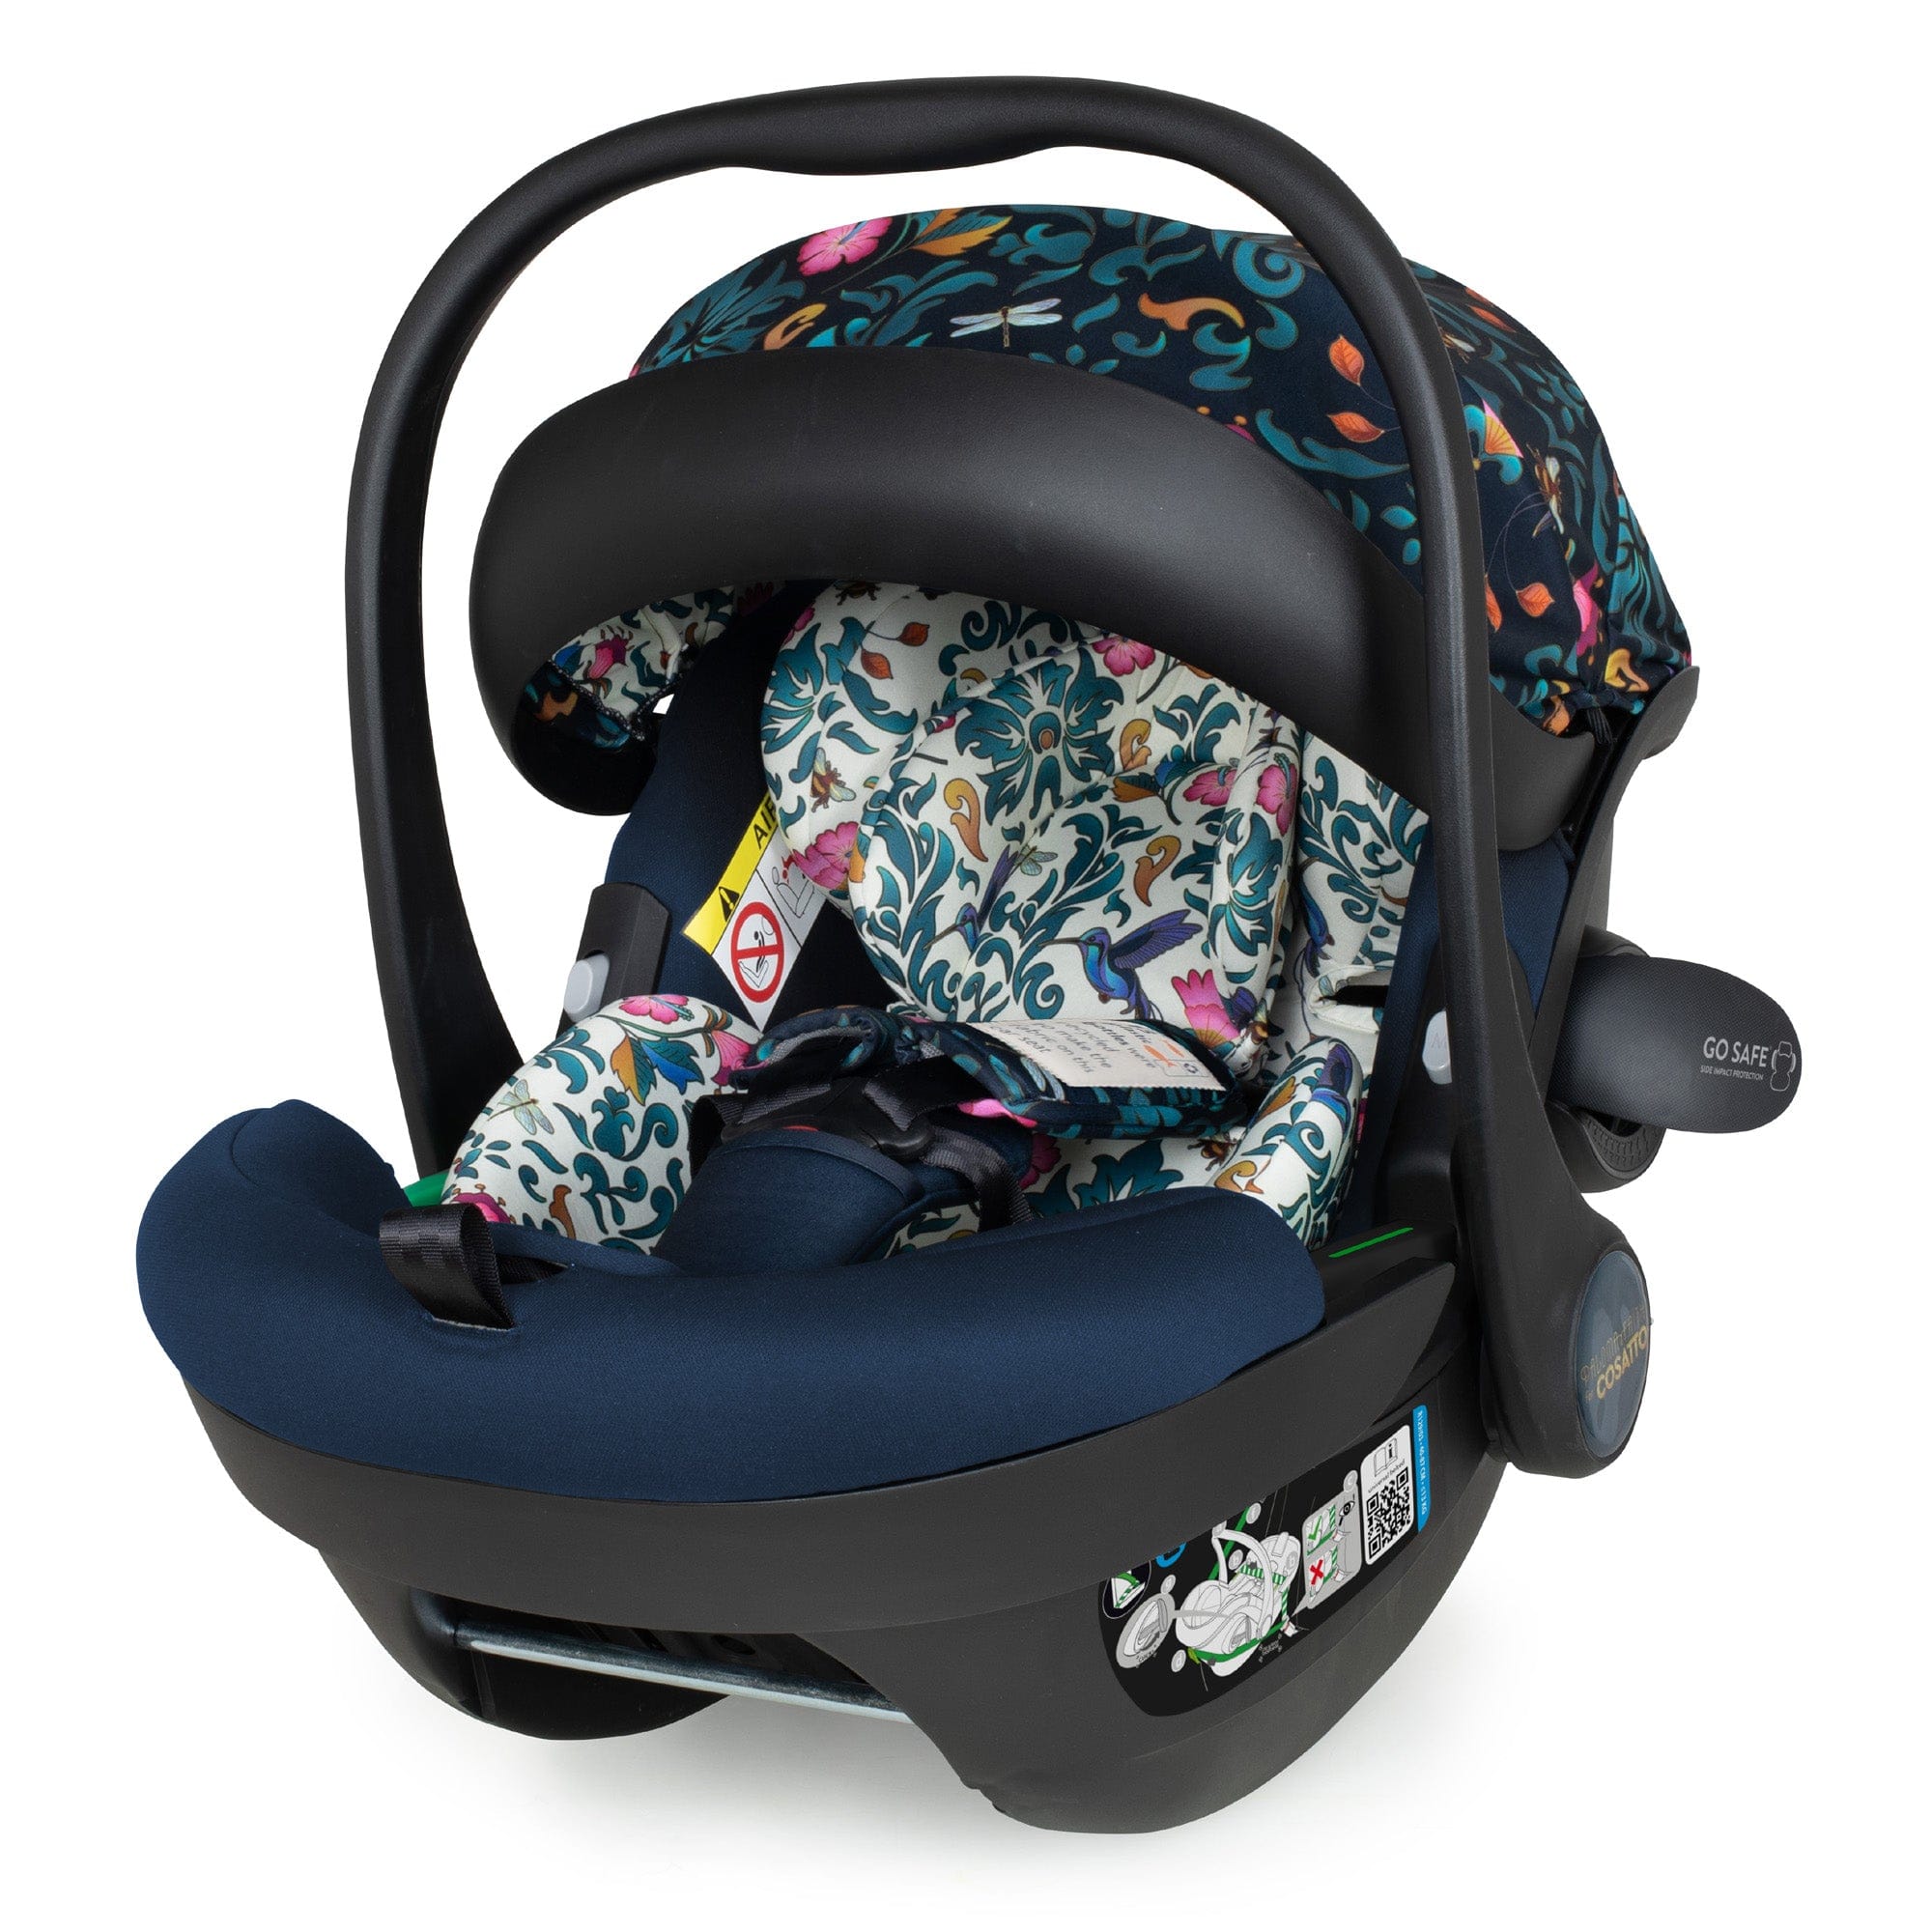 Cosatto baby car seats Cosatto Acorn i-Size Car Seat Wildling CT5176